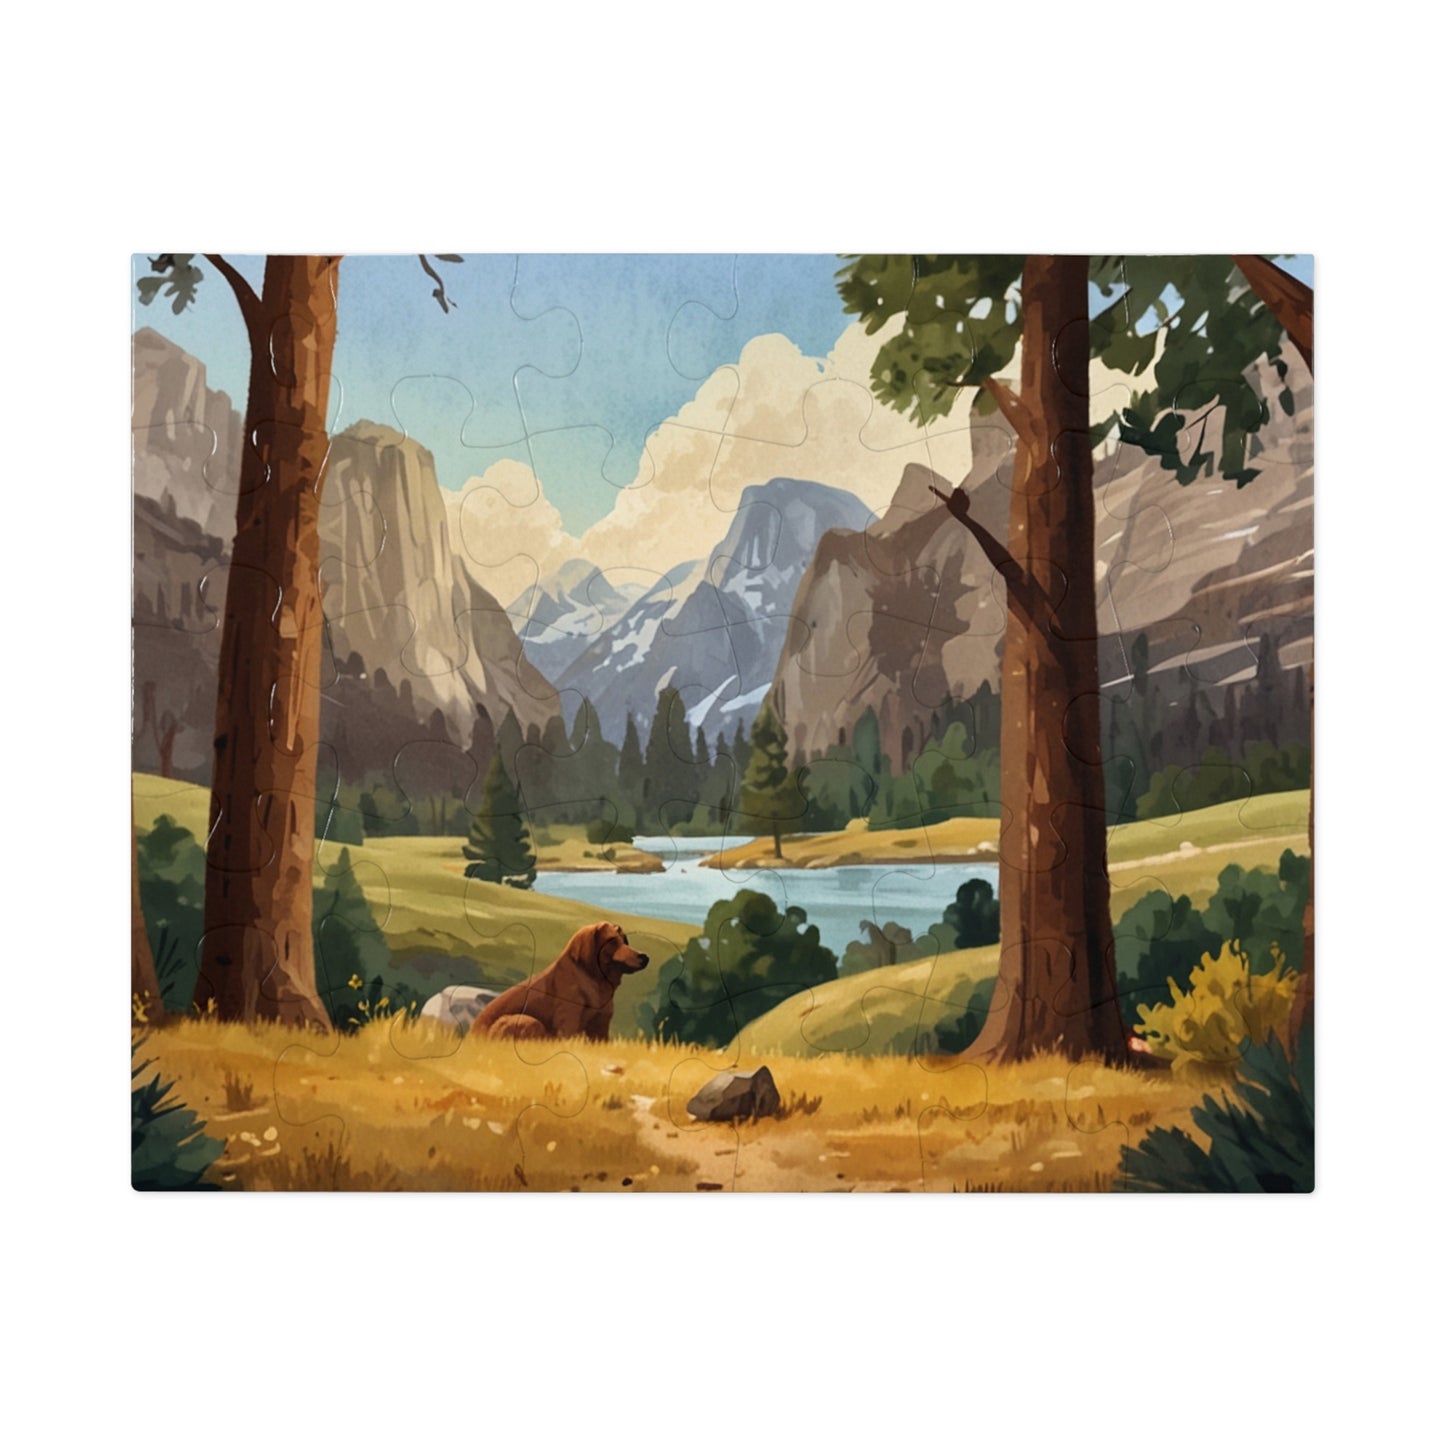 Yosemite Tranquility Jigsaw Puzzle (252, 500, 1000-Piece)